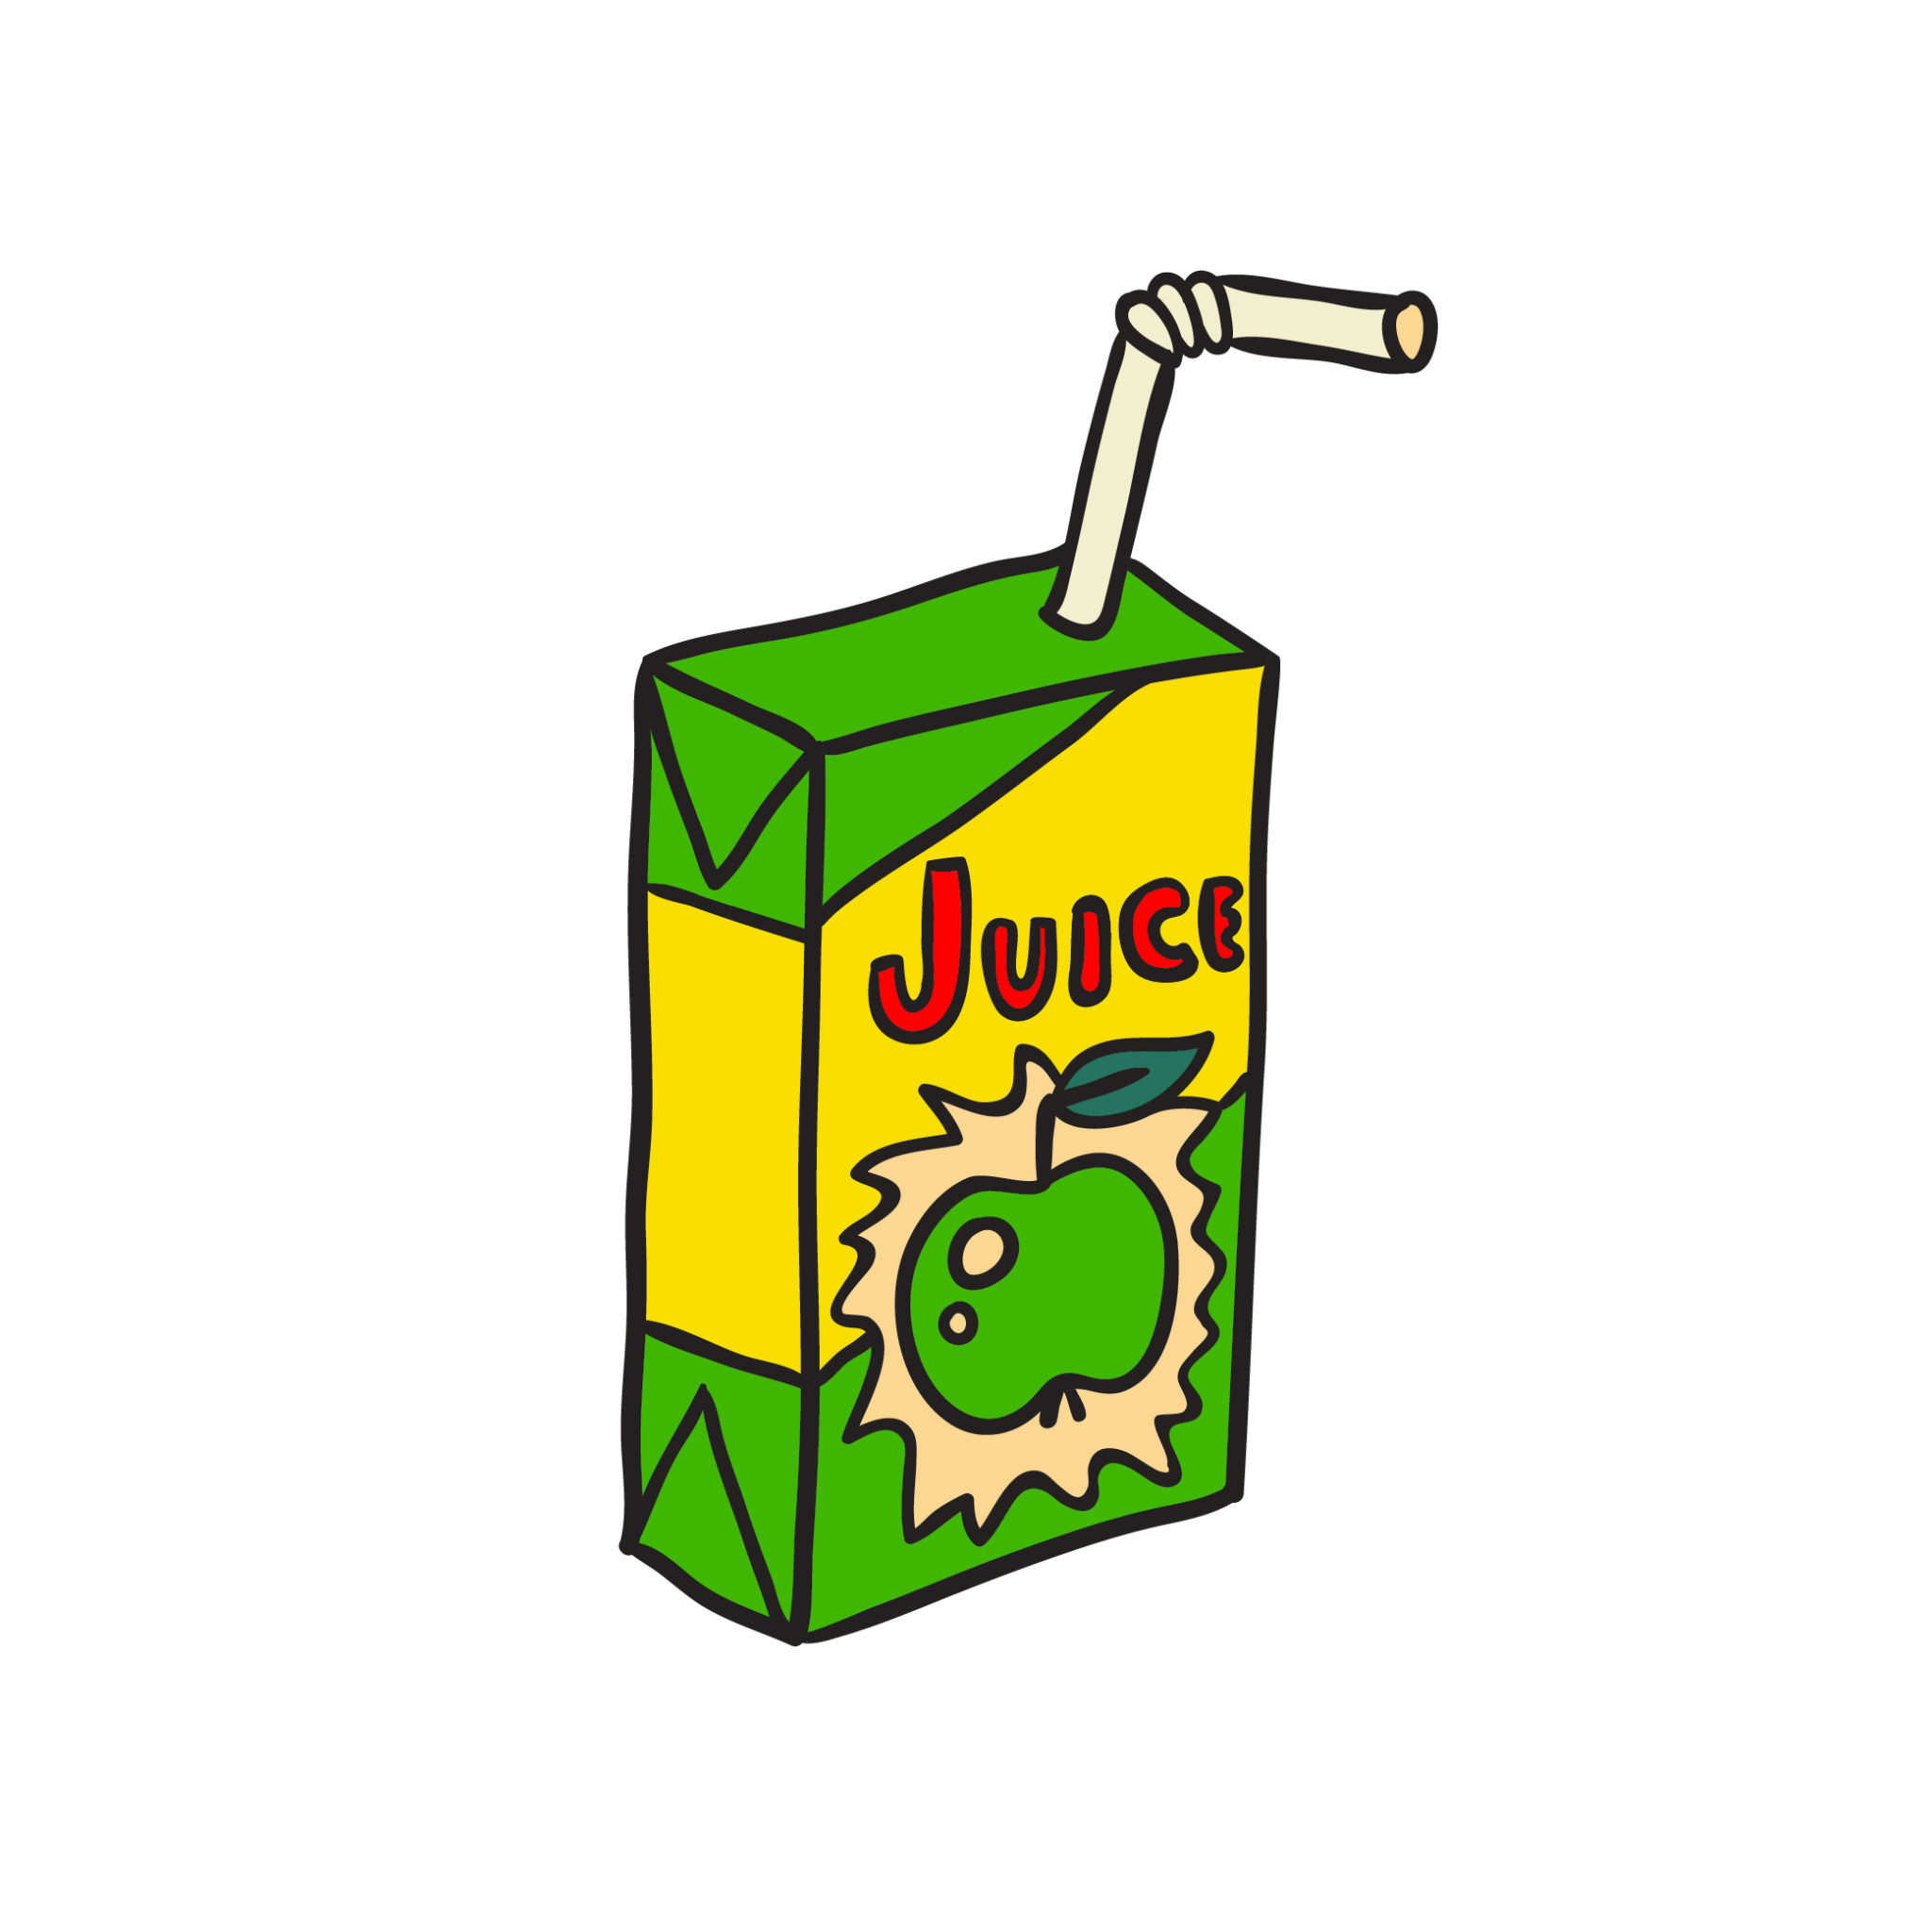 A cartoon image of a juice box